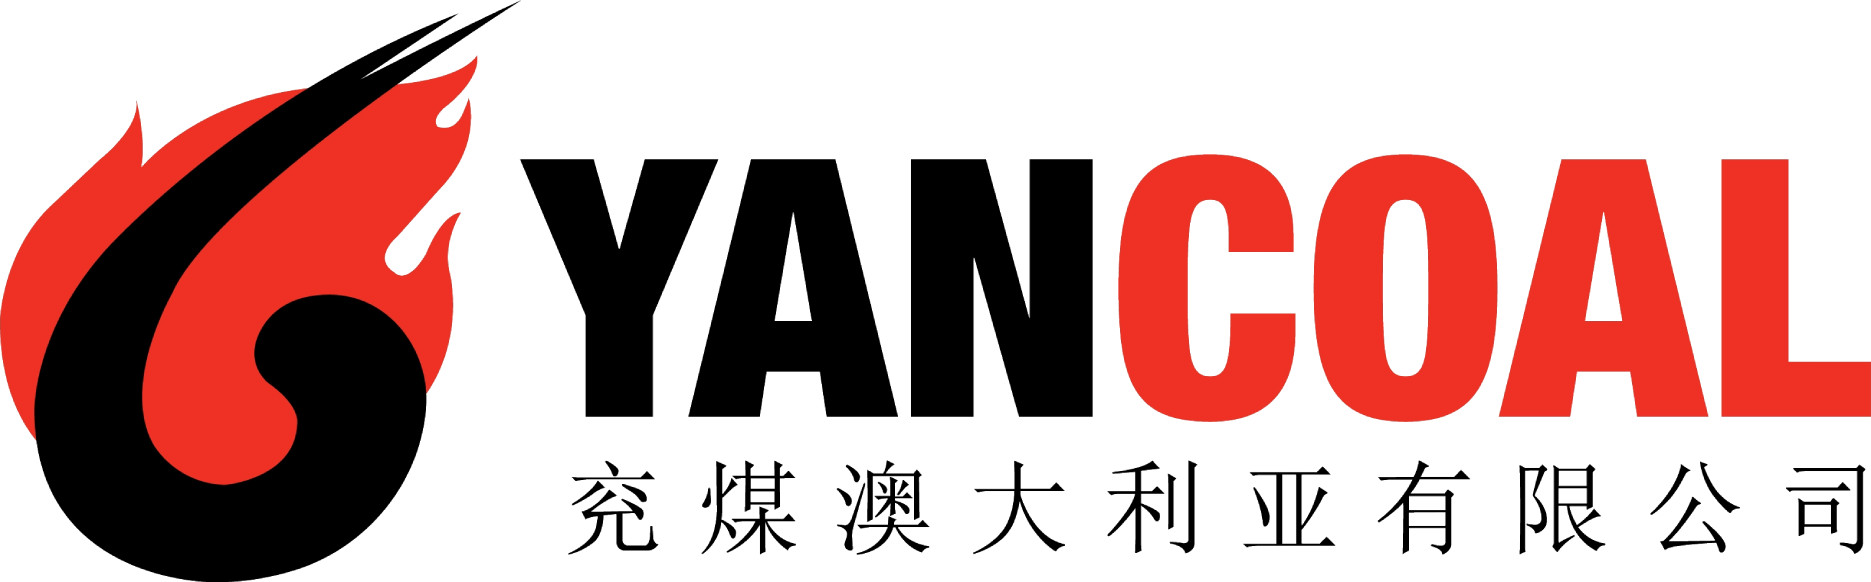 Yancoal logo